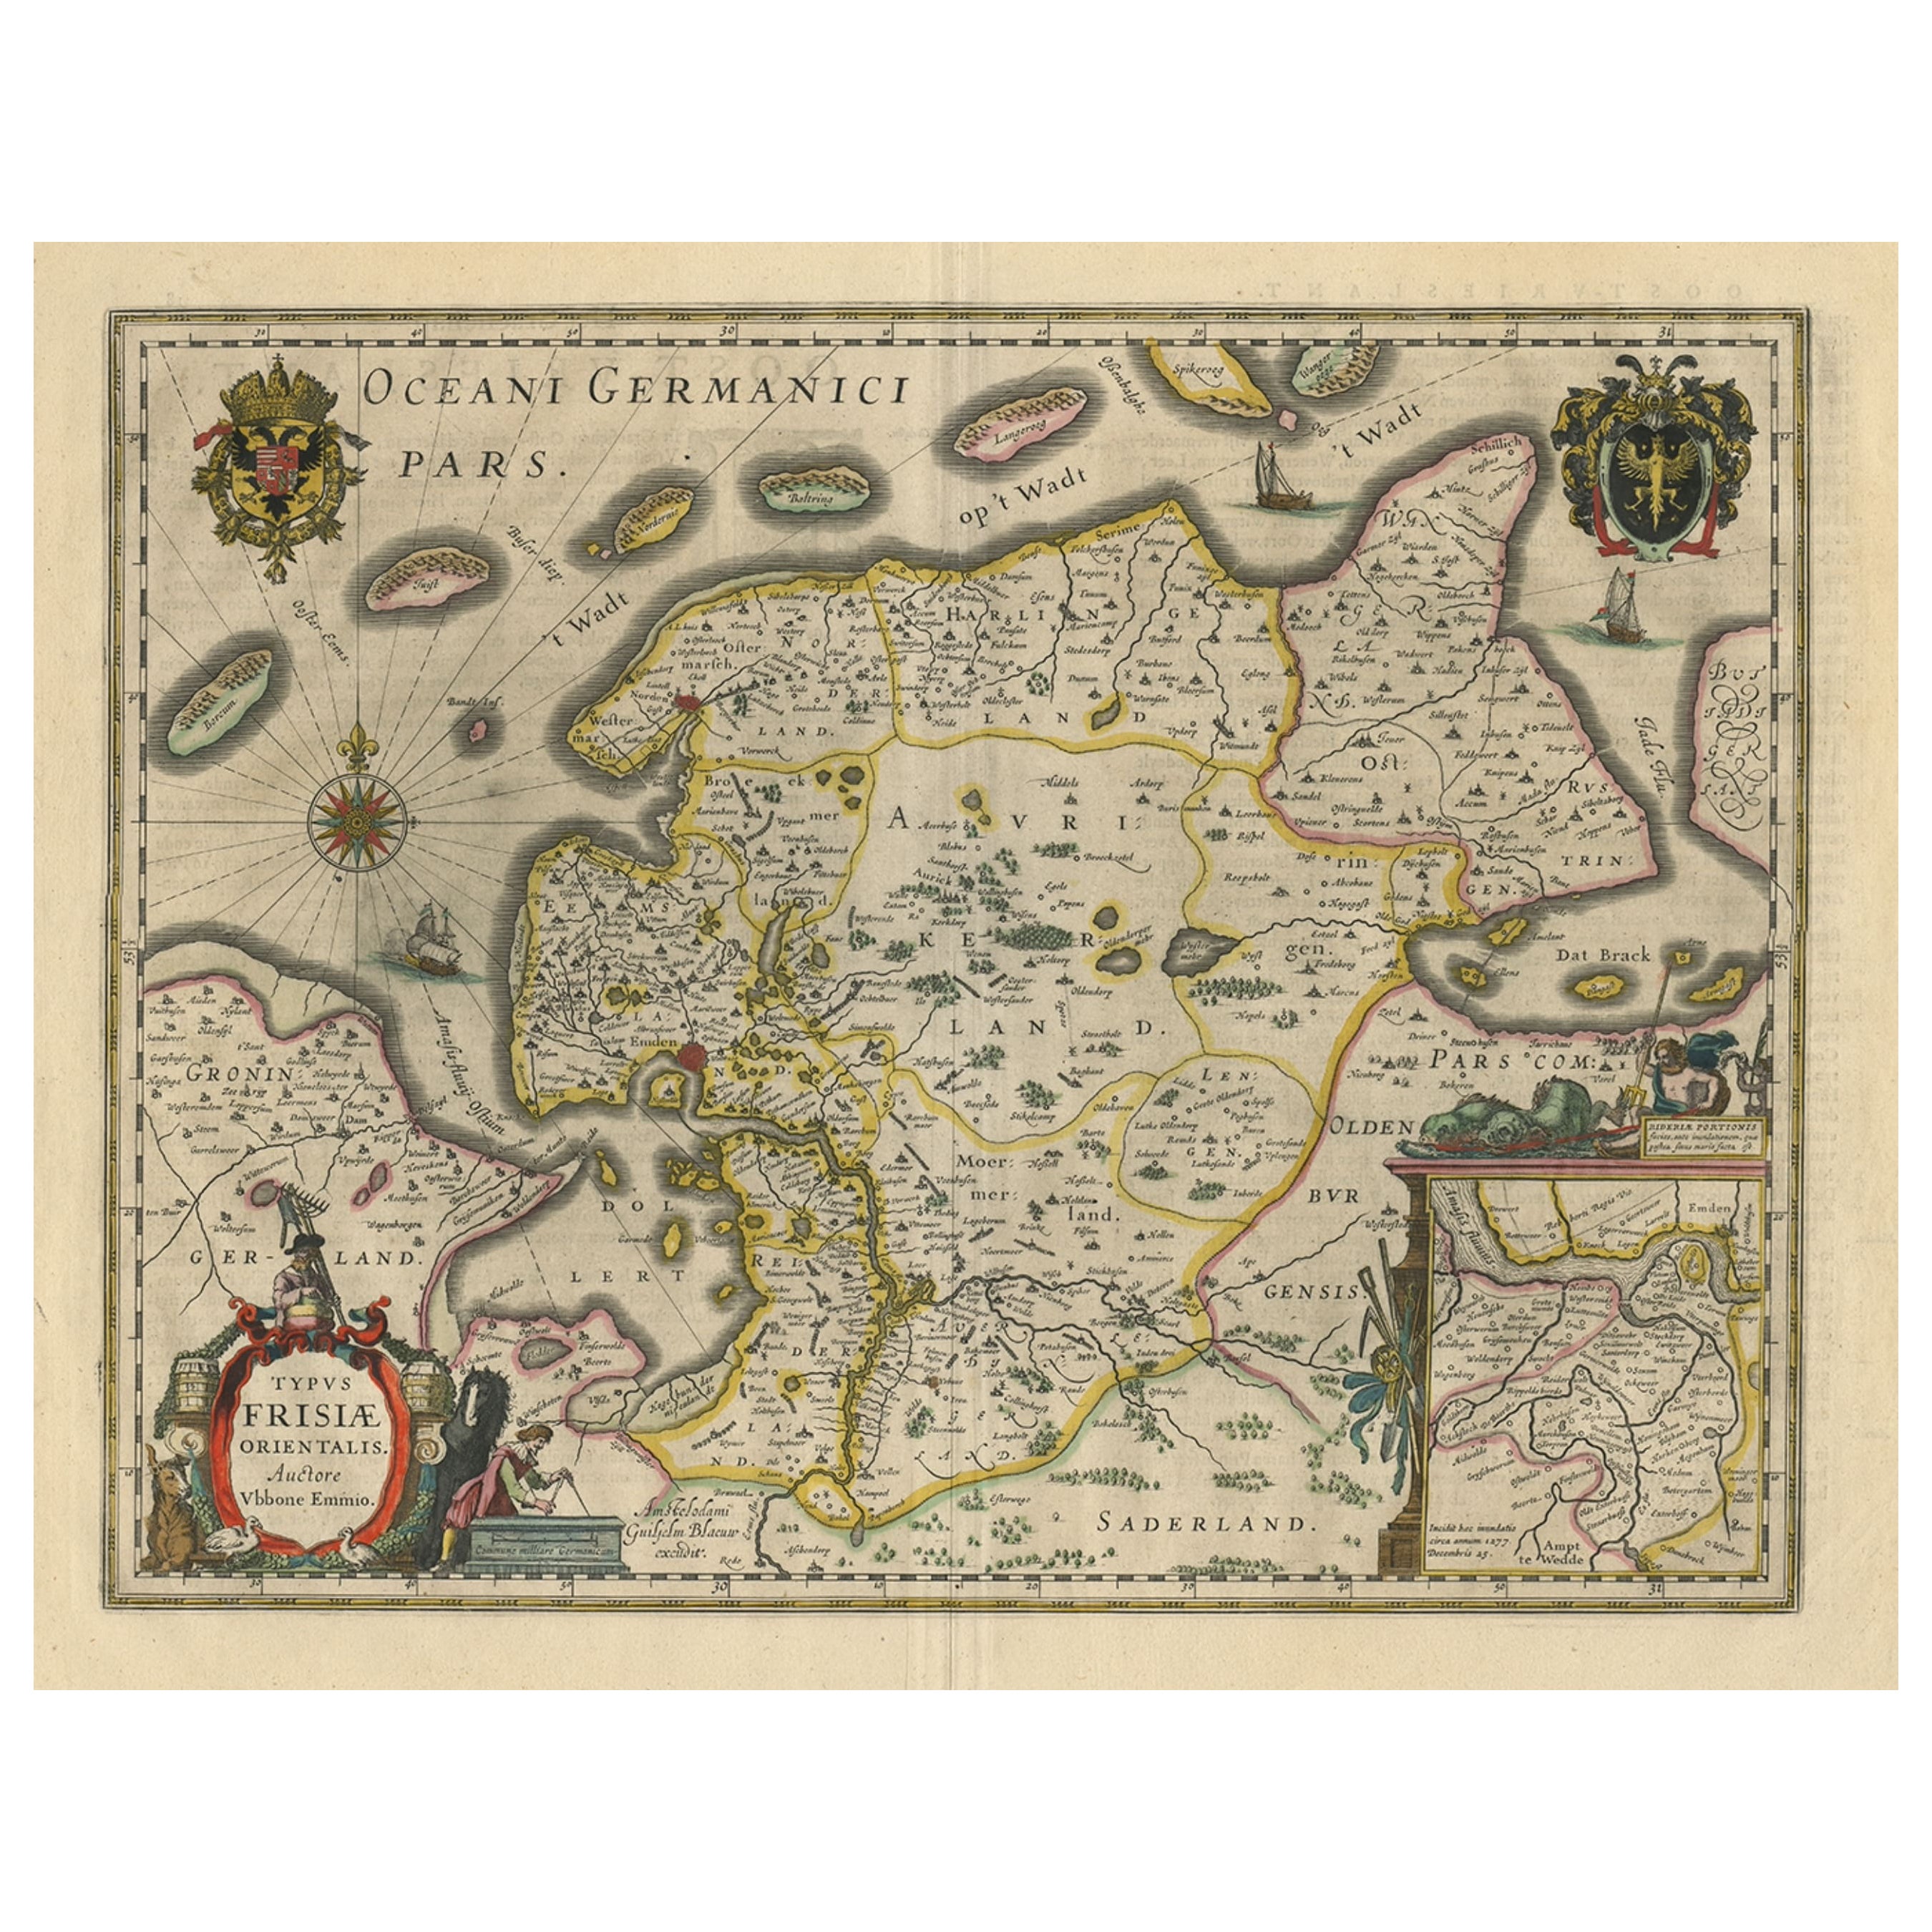 Map of East Friesland, The Netherlands & the Area Emden & Norden, Germany, 1635